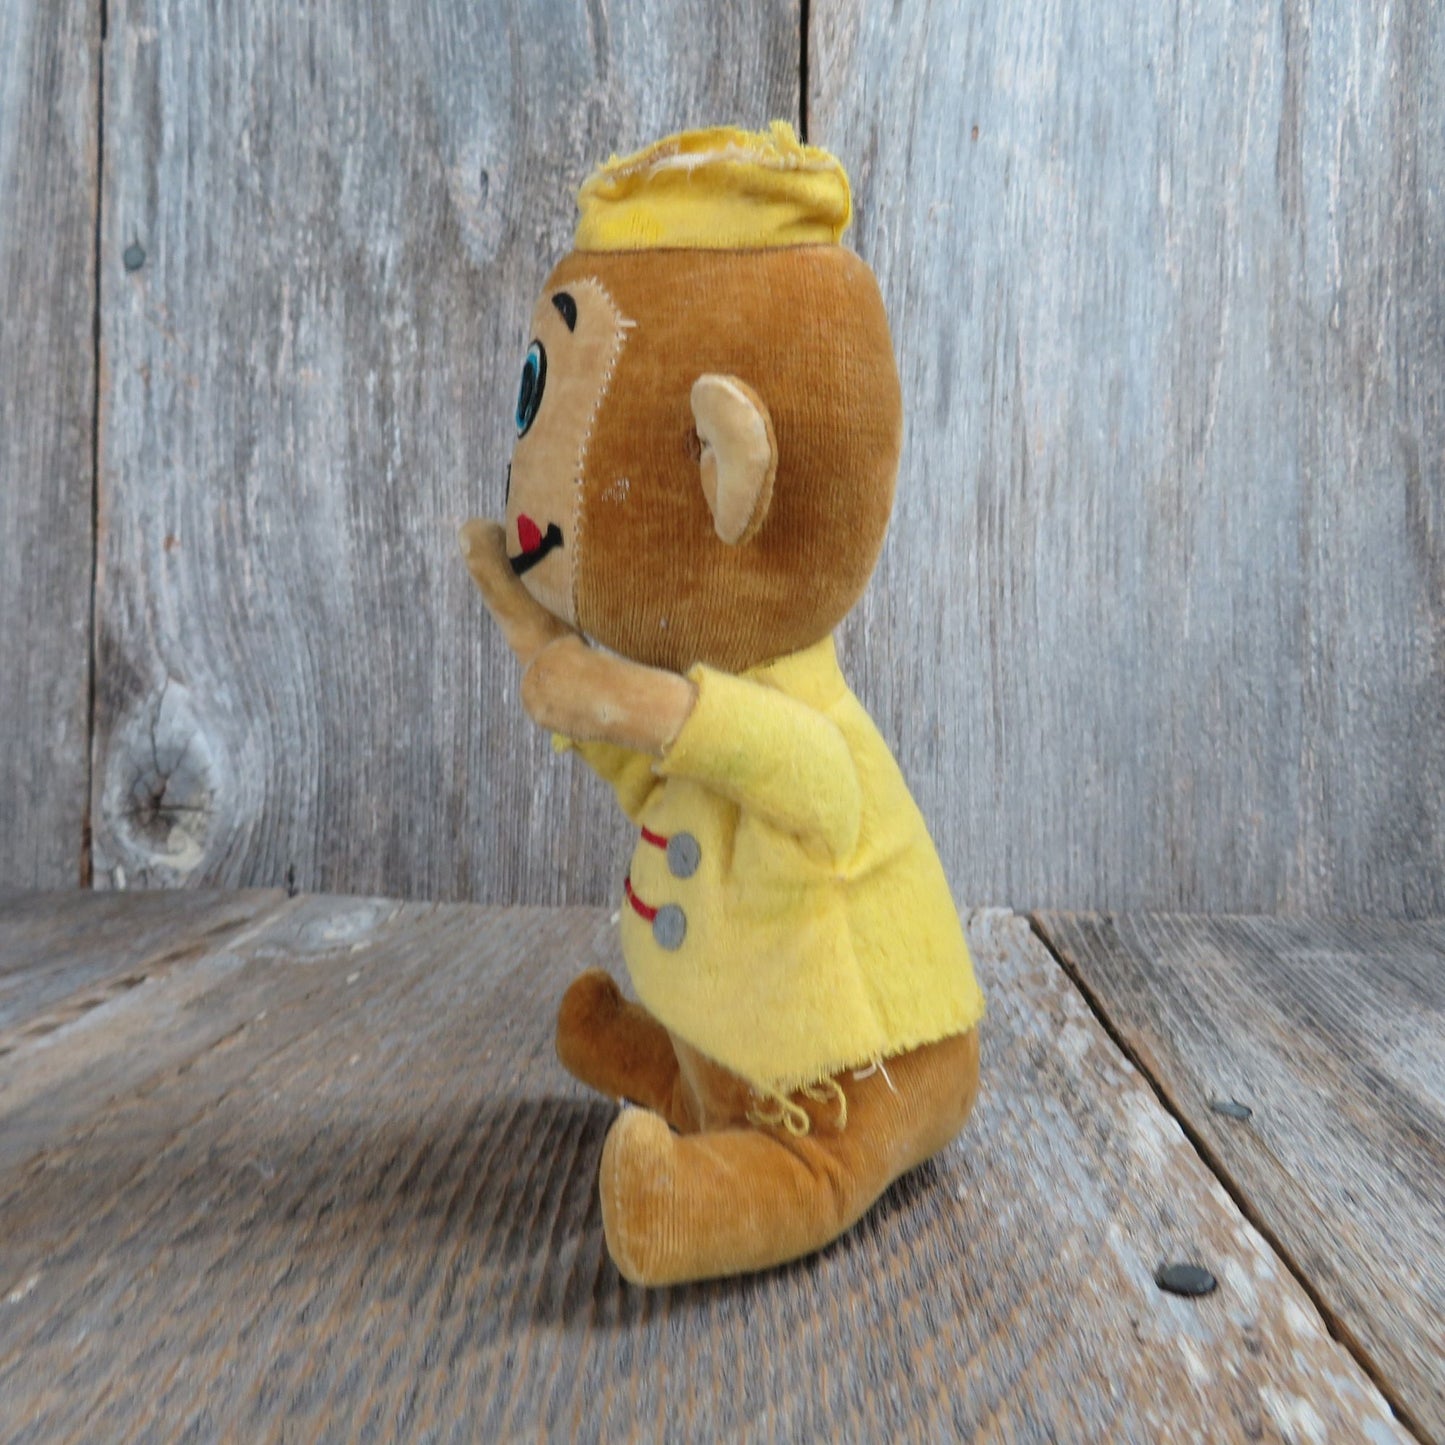 Monkey Circus Clown Plush Dakin Straw Wood Filled Dream Pets Made in Japan Velour Felt Stuffed Animals